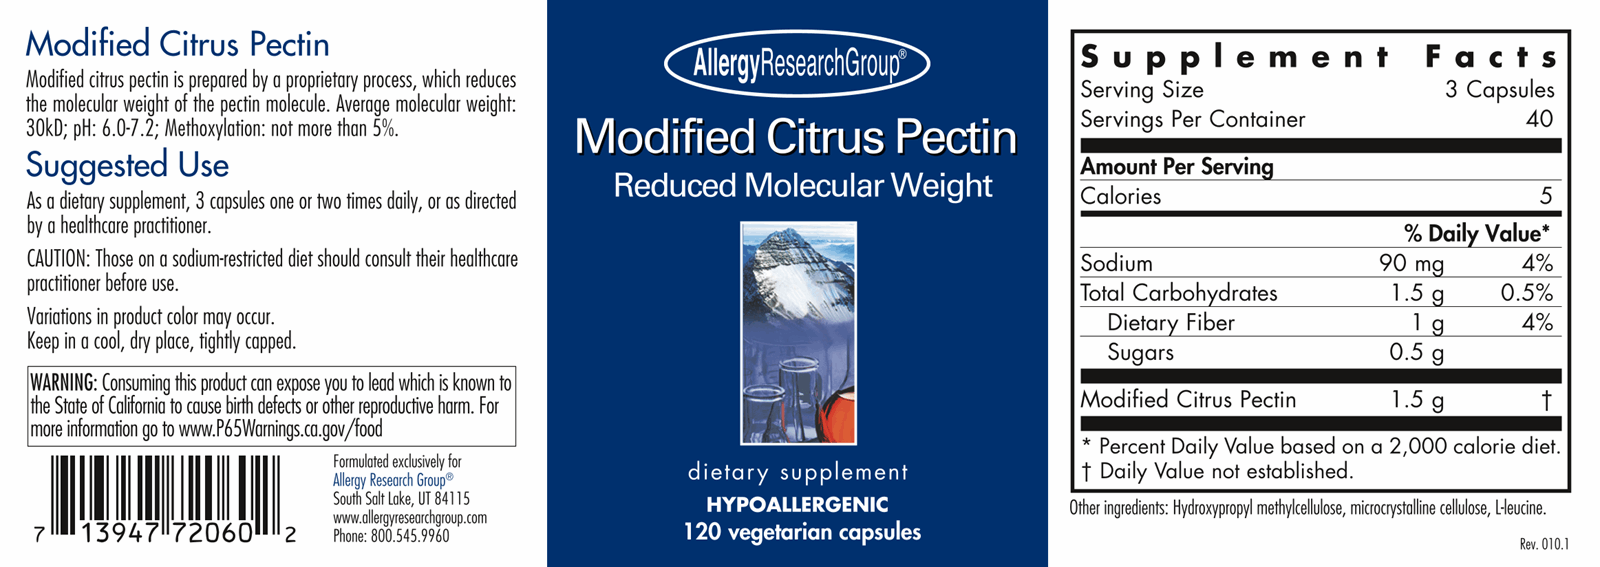 Modified Citrus Pectin 